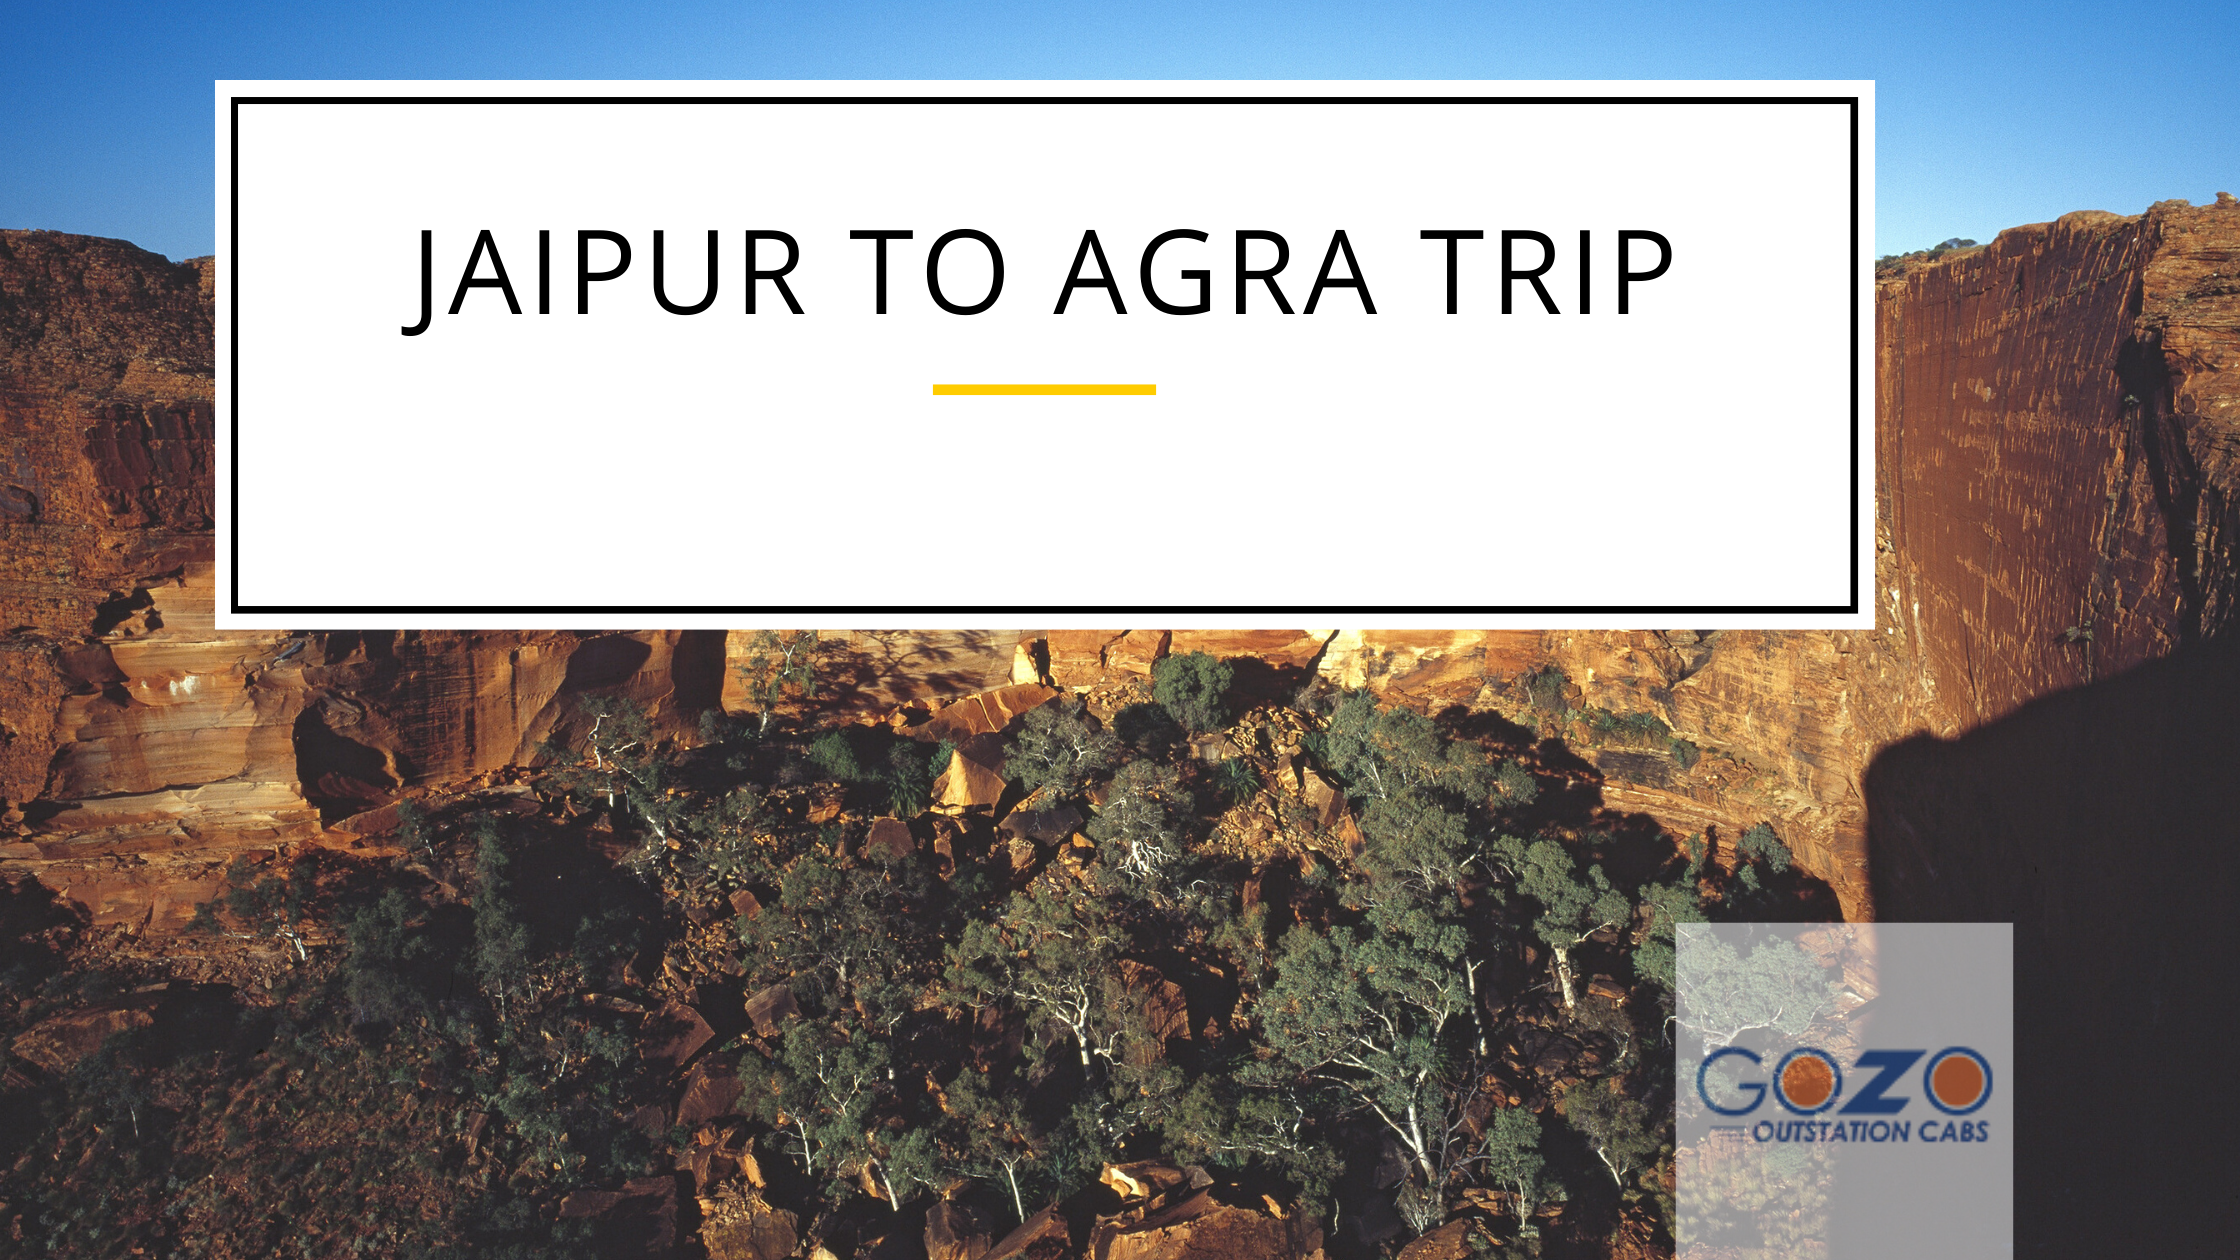 Jaipur to Agra trip